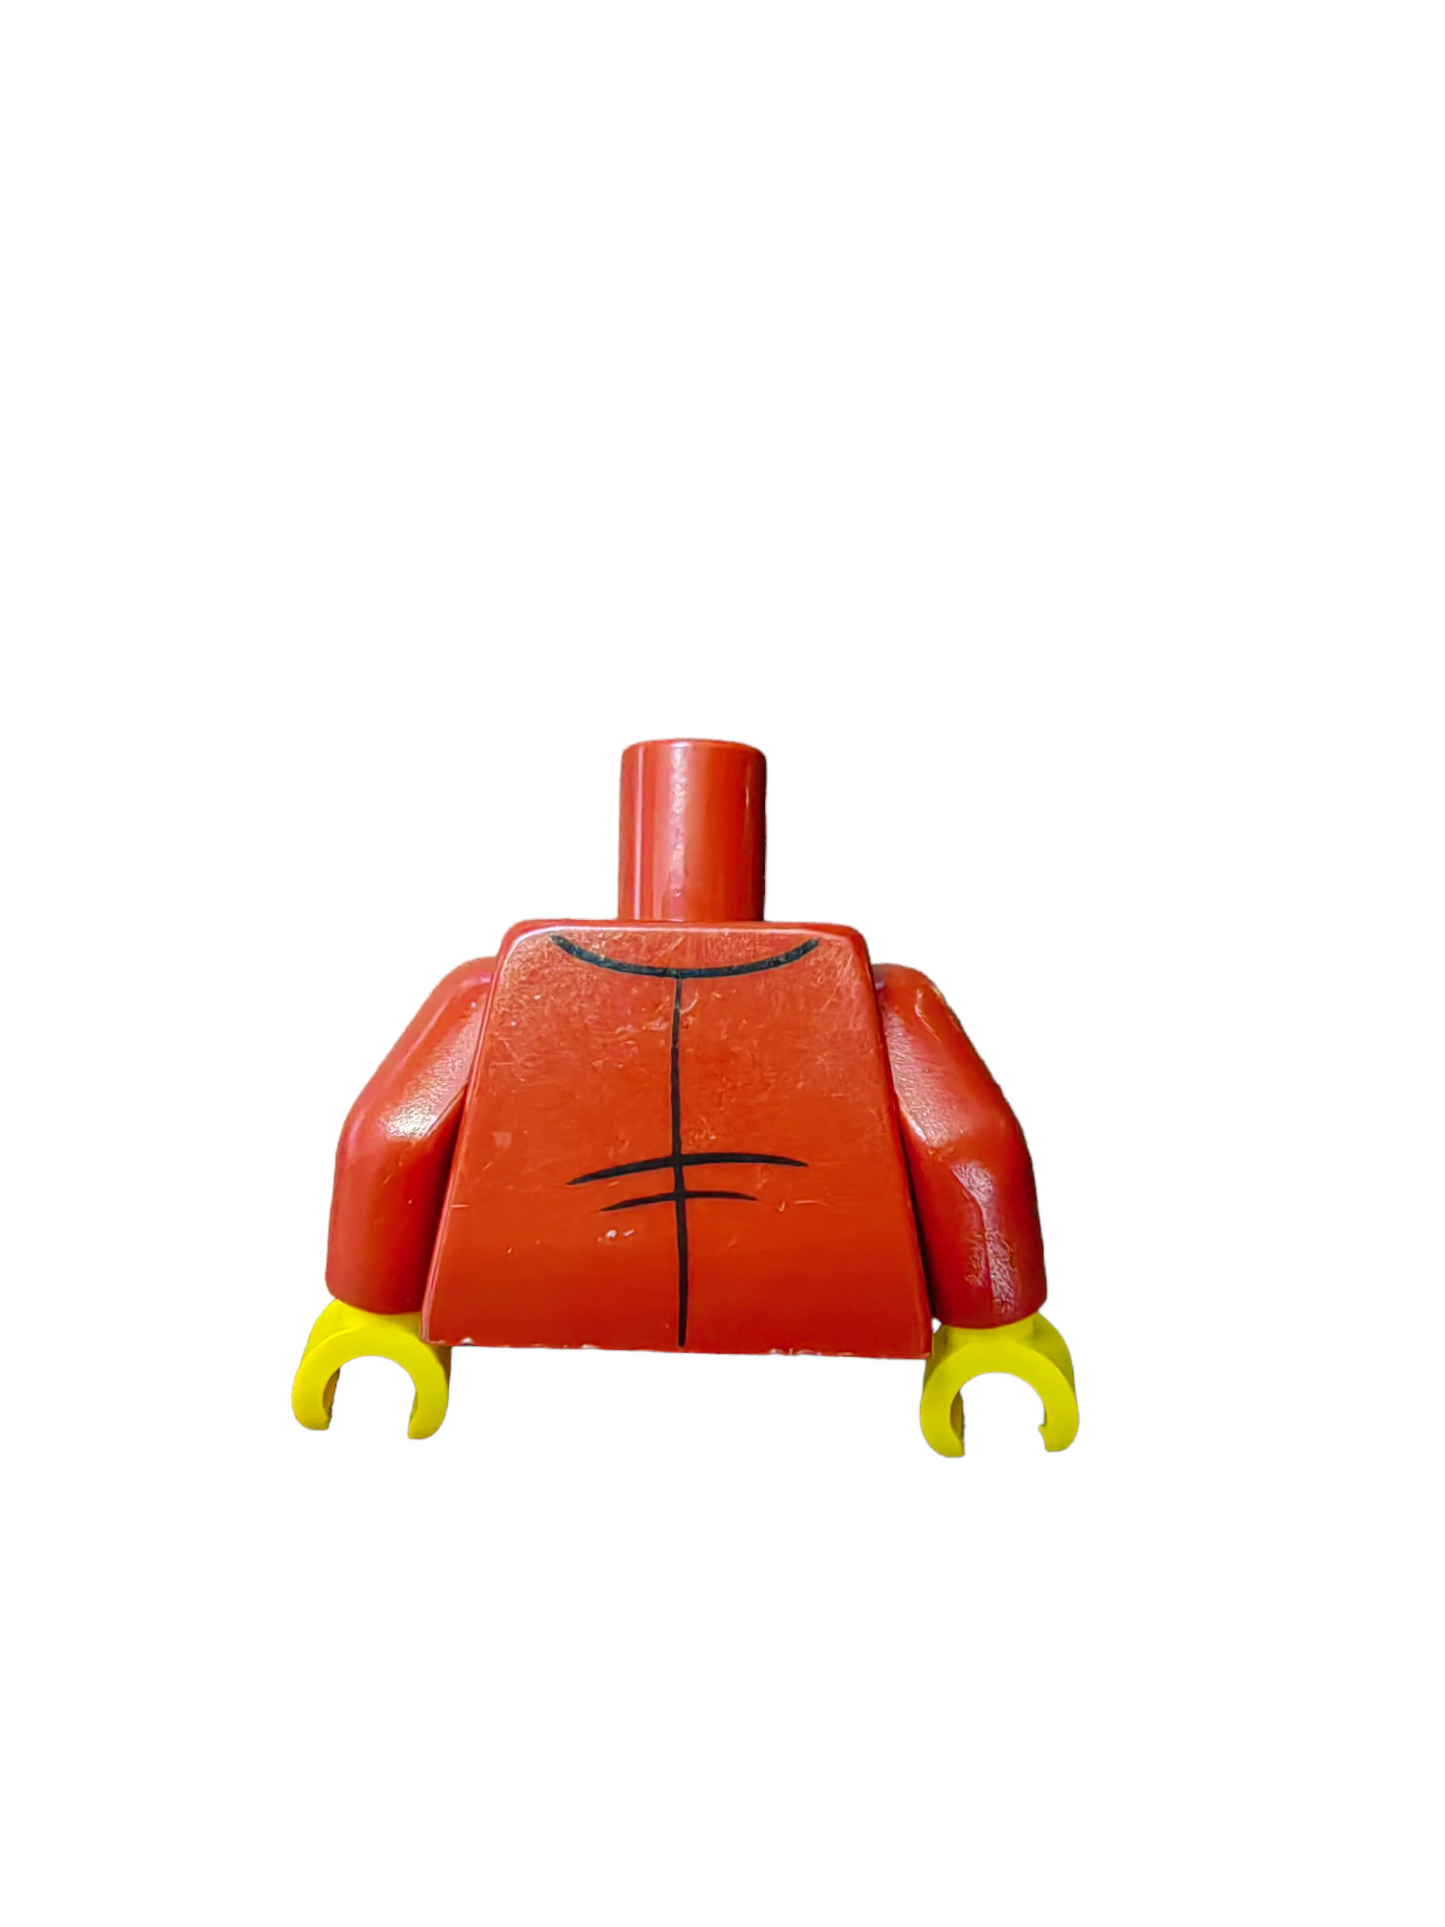 LEGO Torso, Reddish Suit Jacket over Gold Waistcoat - UB1138